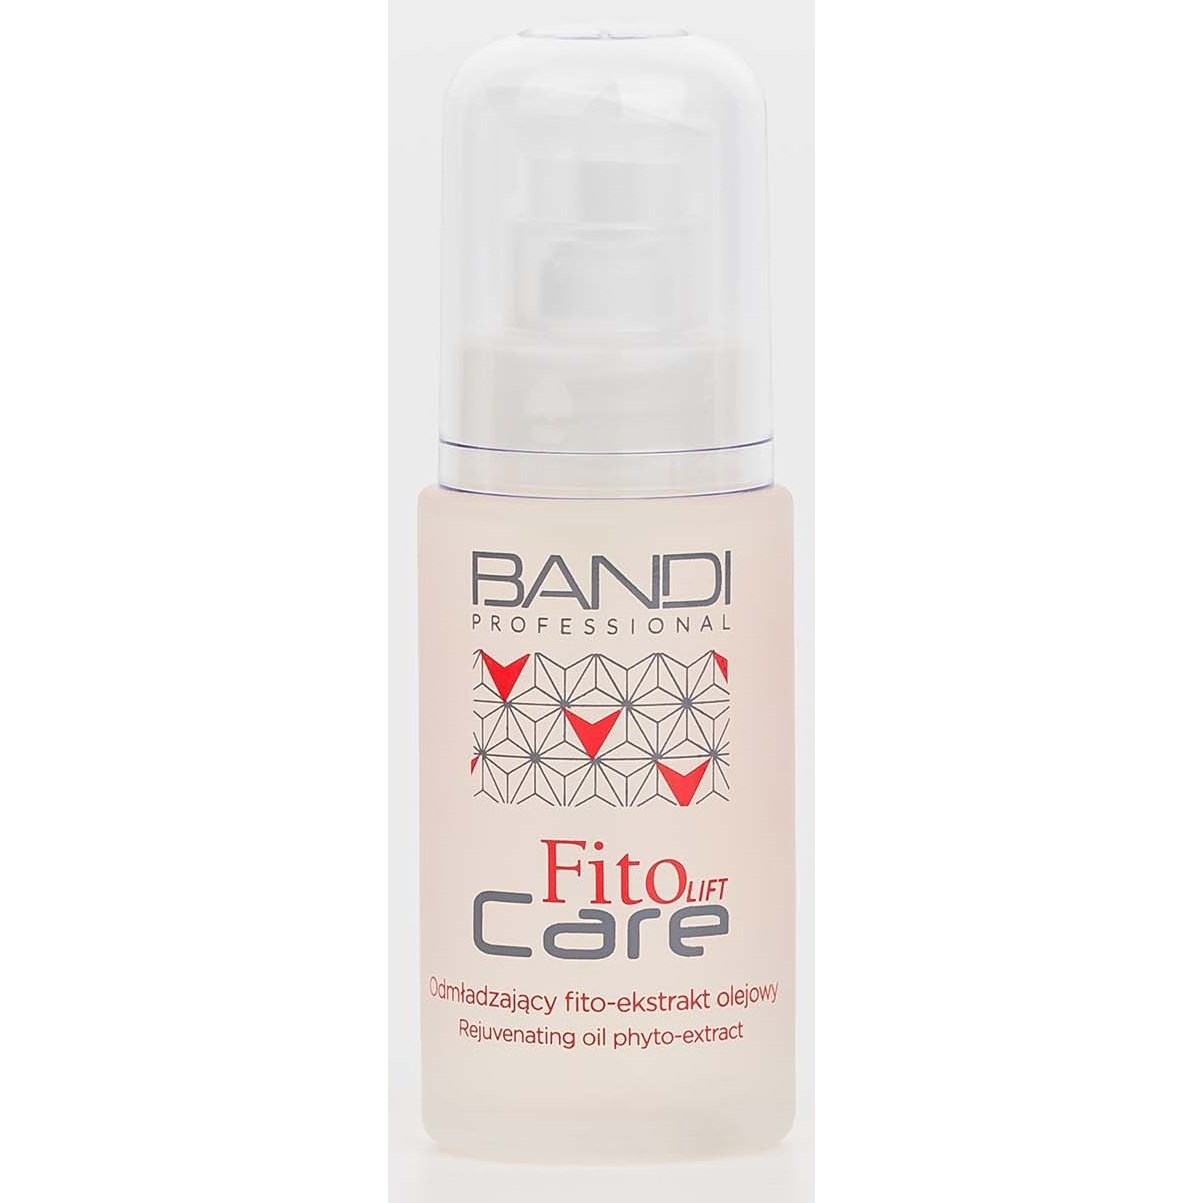 Bandi Fito Lift Care Rejuvenating Oil Phyto-extract 30 ml